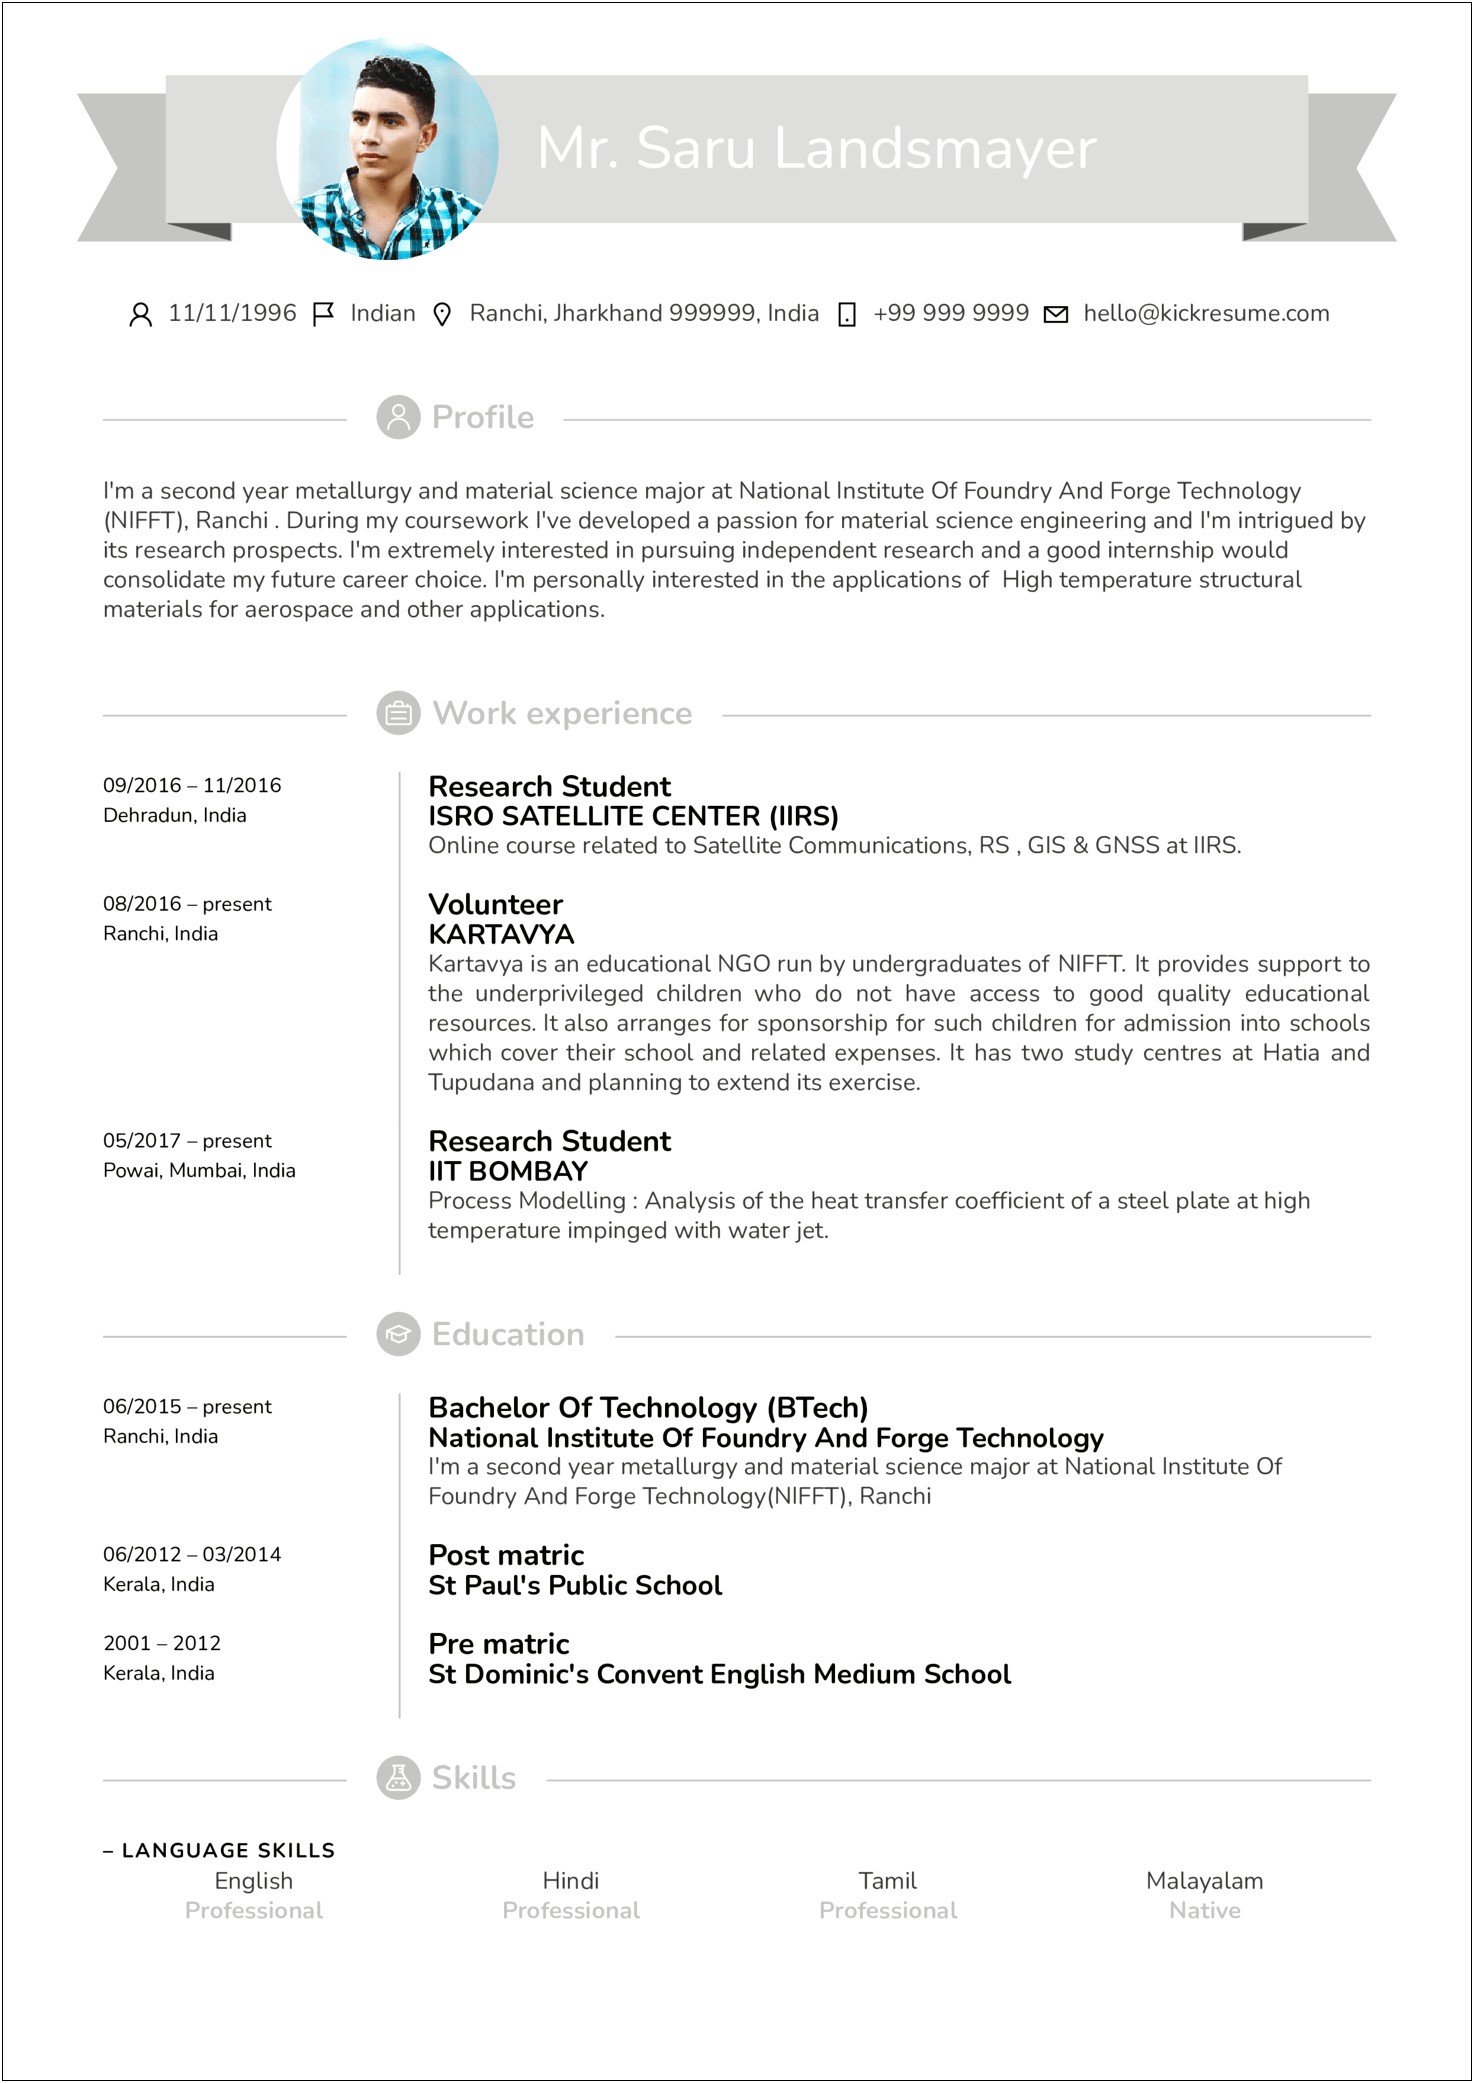 List Undergraduate Research Experience On Resume